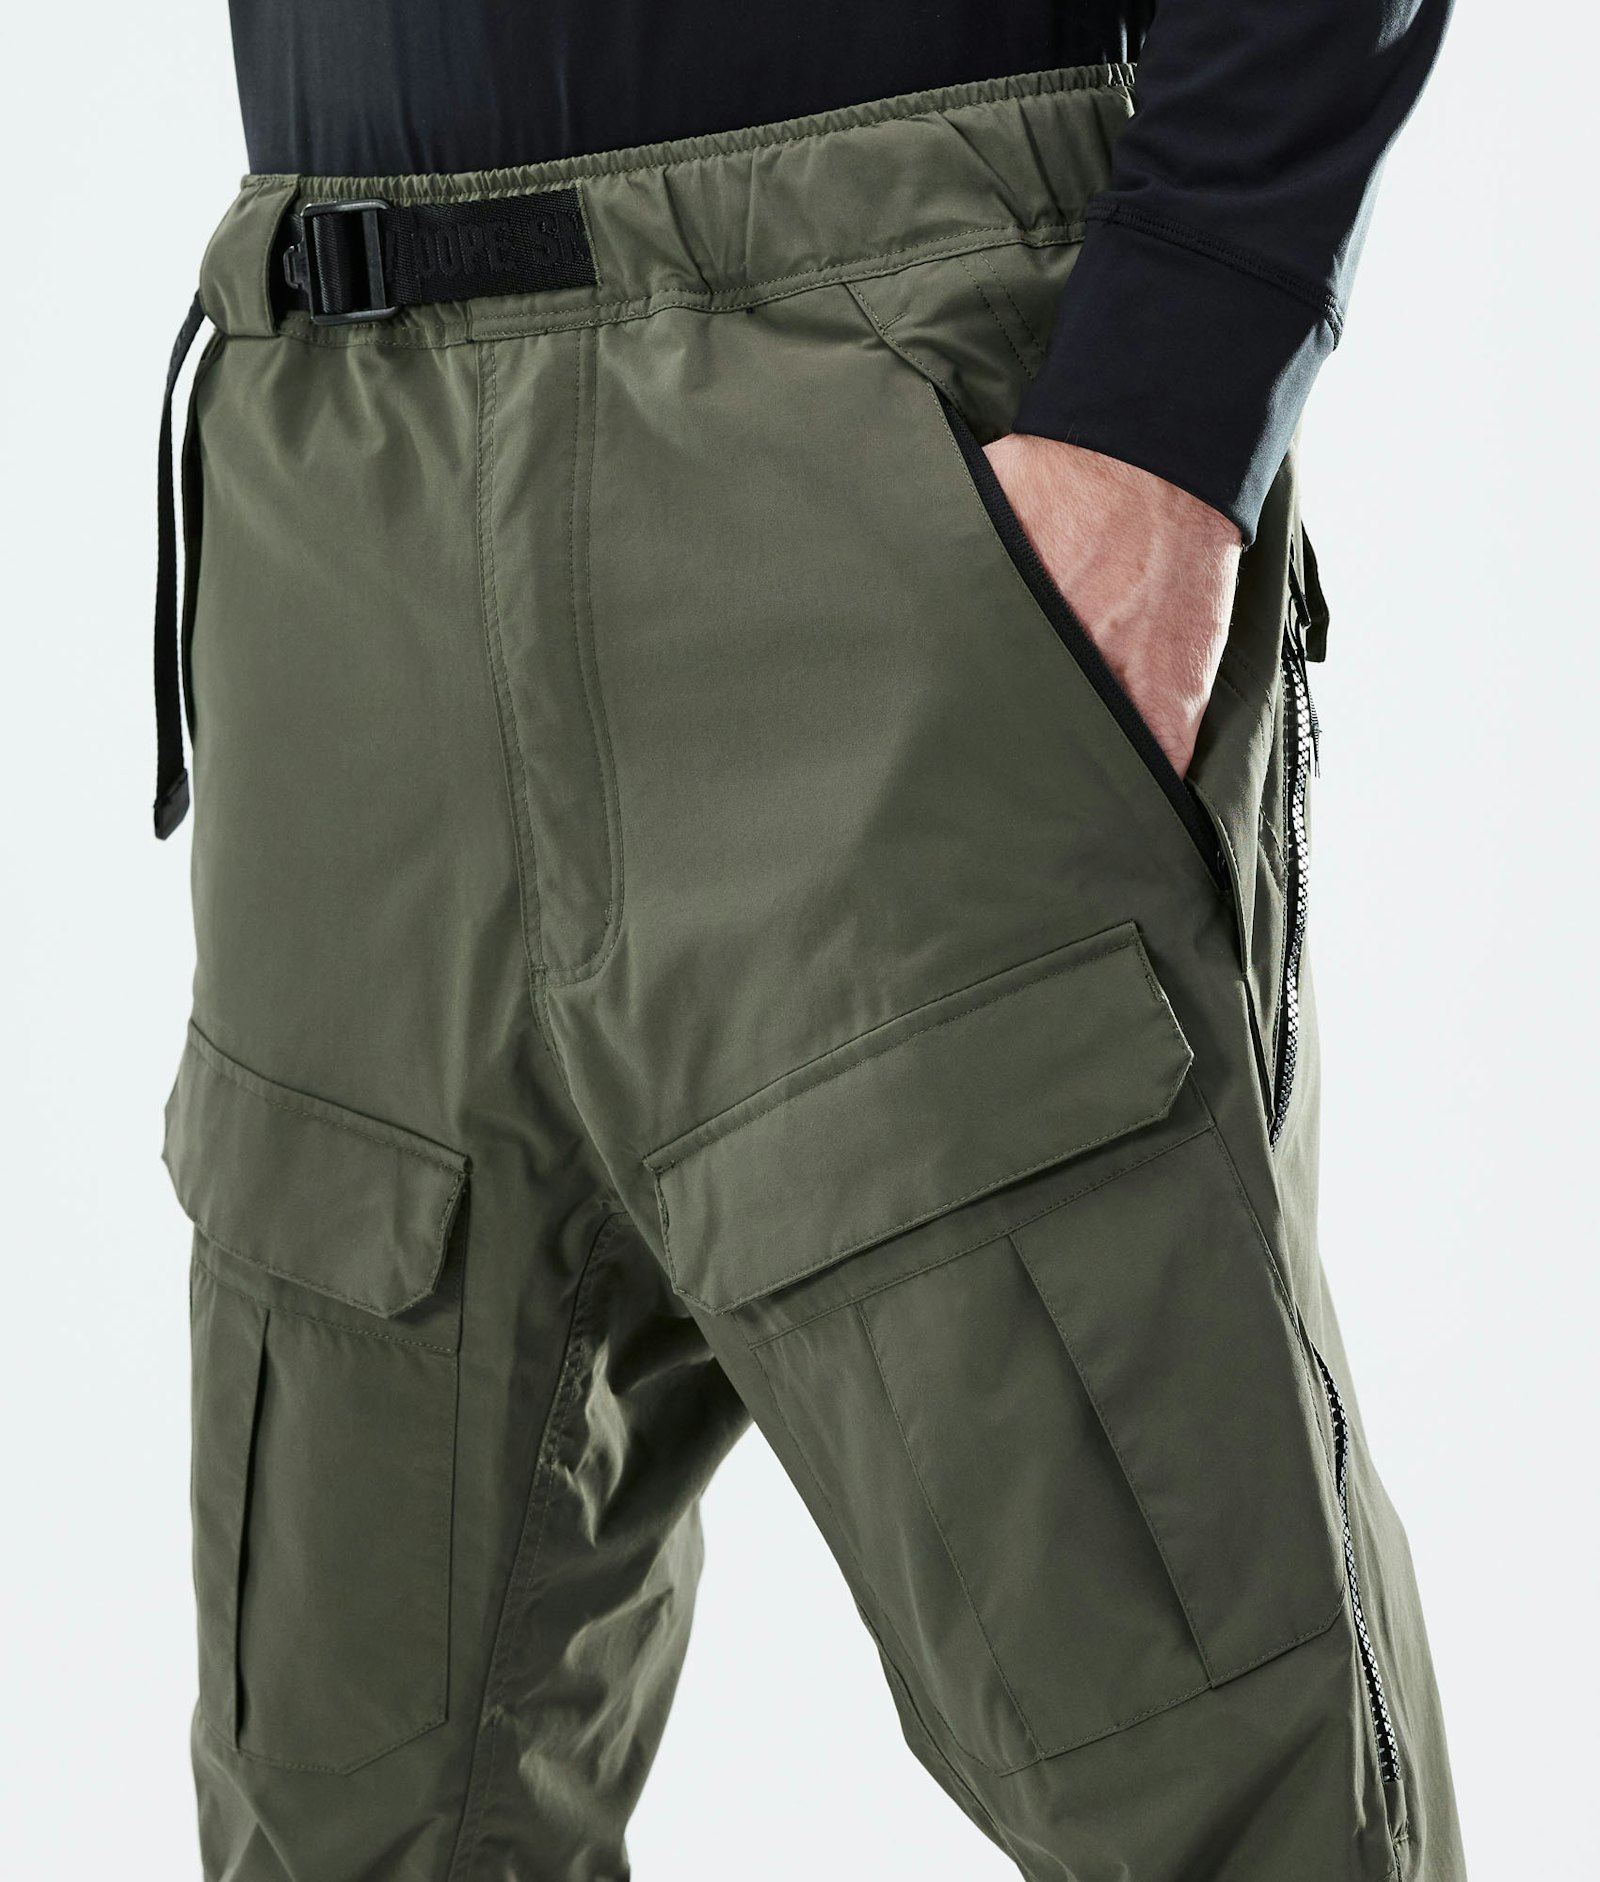 Antek Pantalon de Snowboard Homme Olive Green